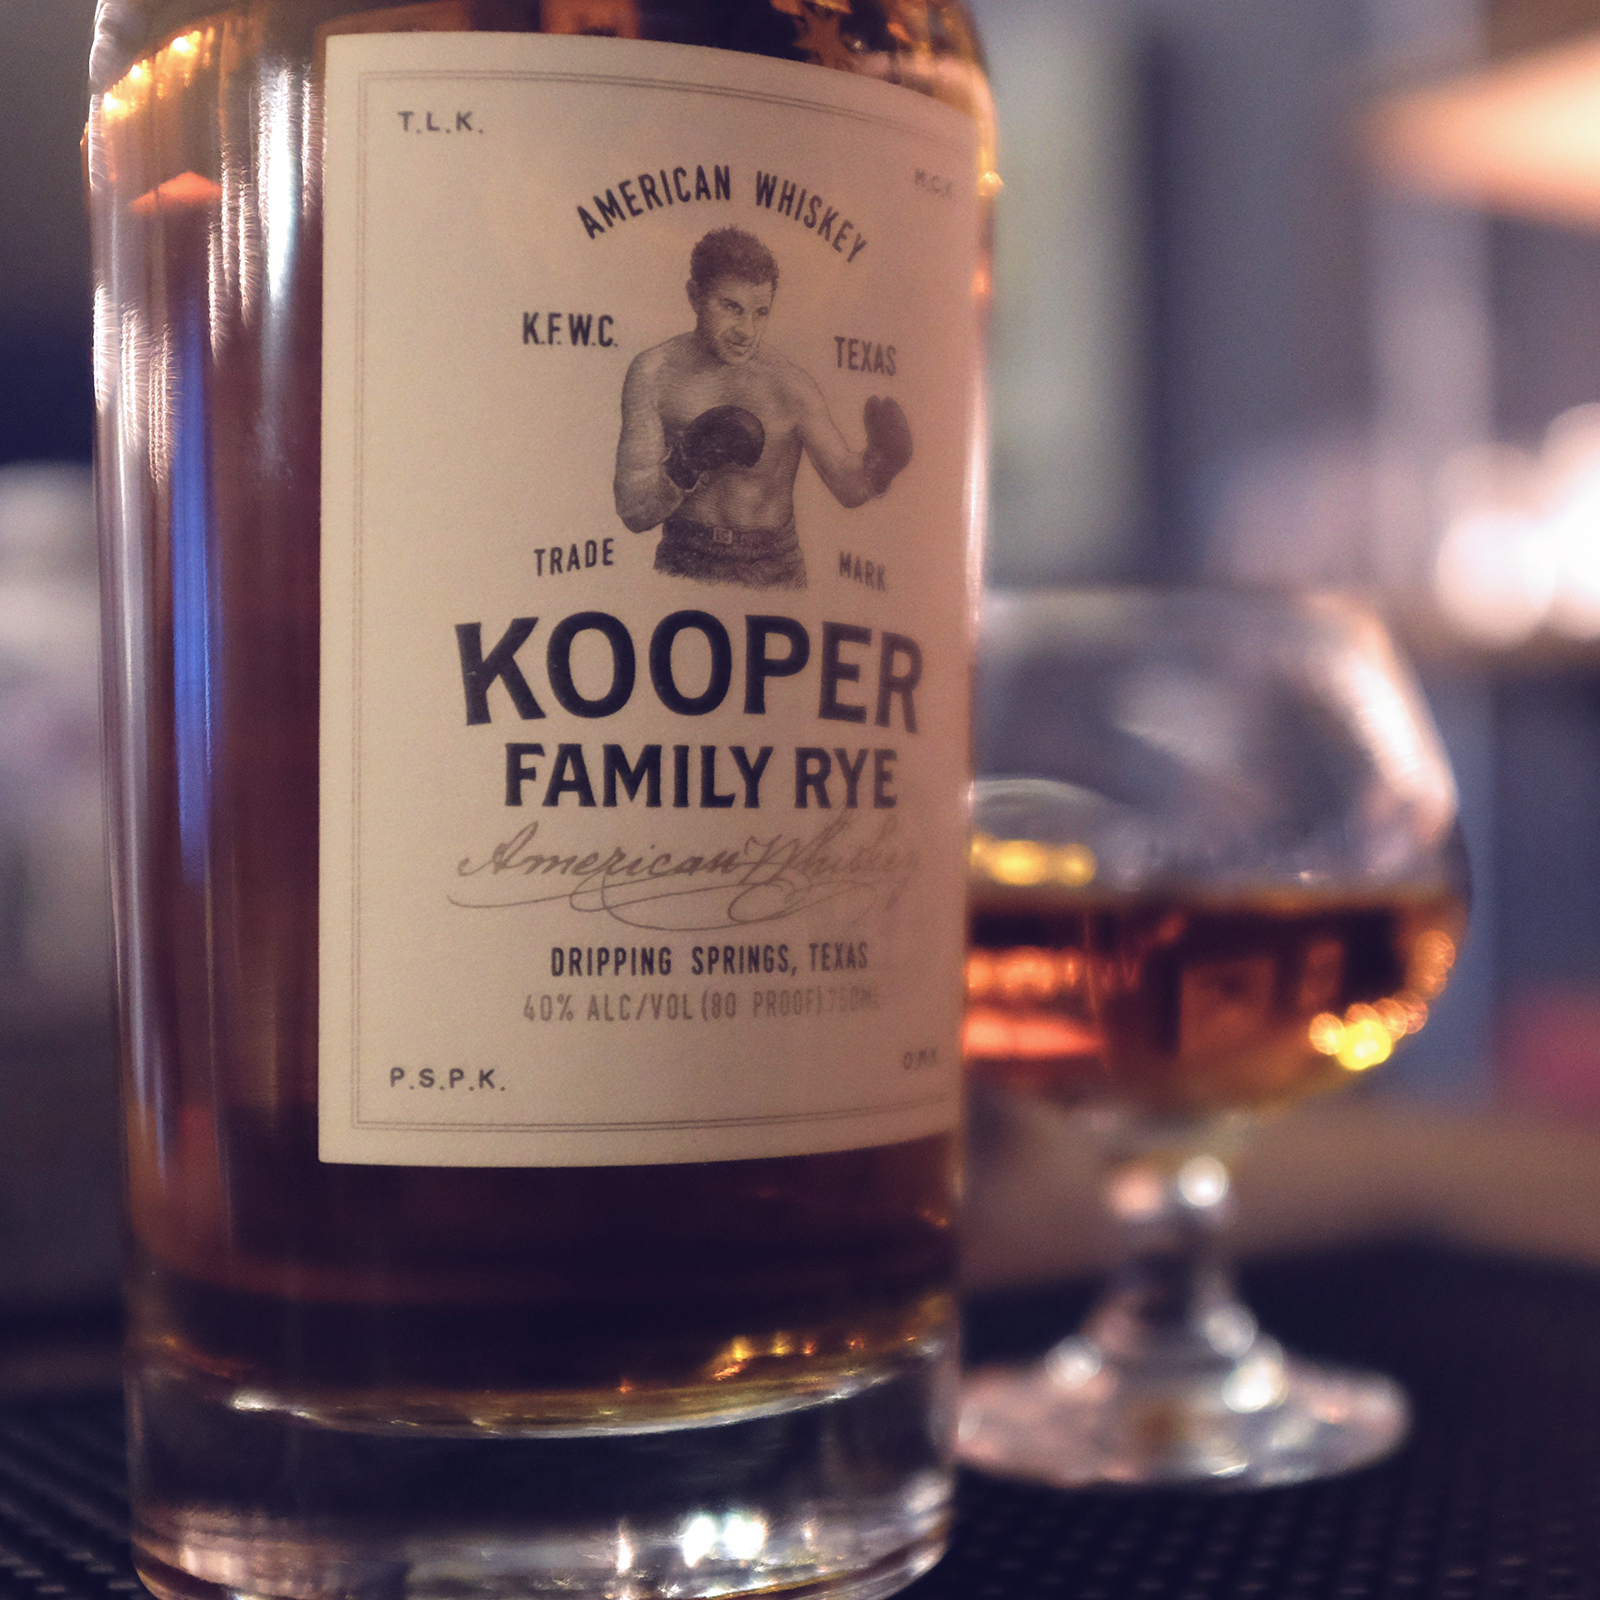 Kooper-Family-Rye-Texas-Whiskey-1